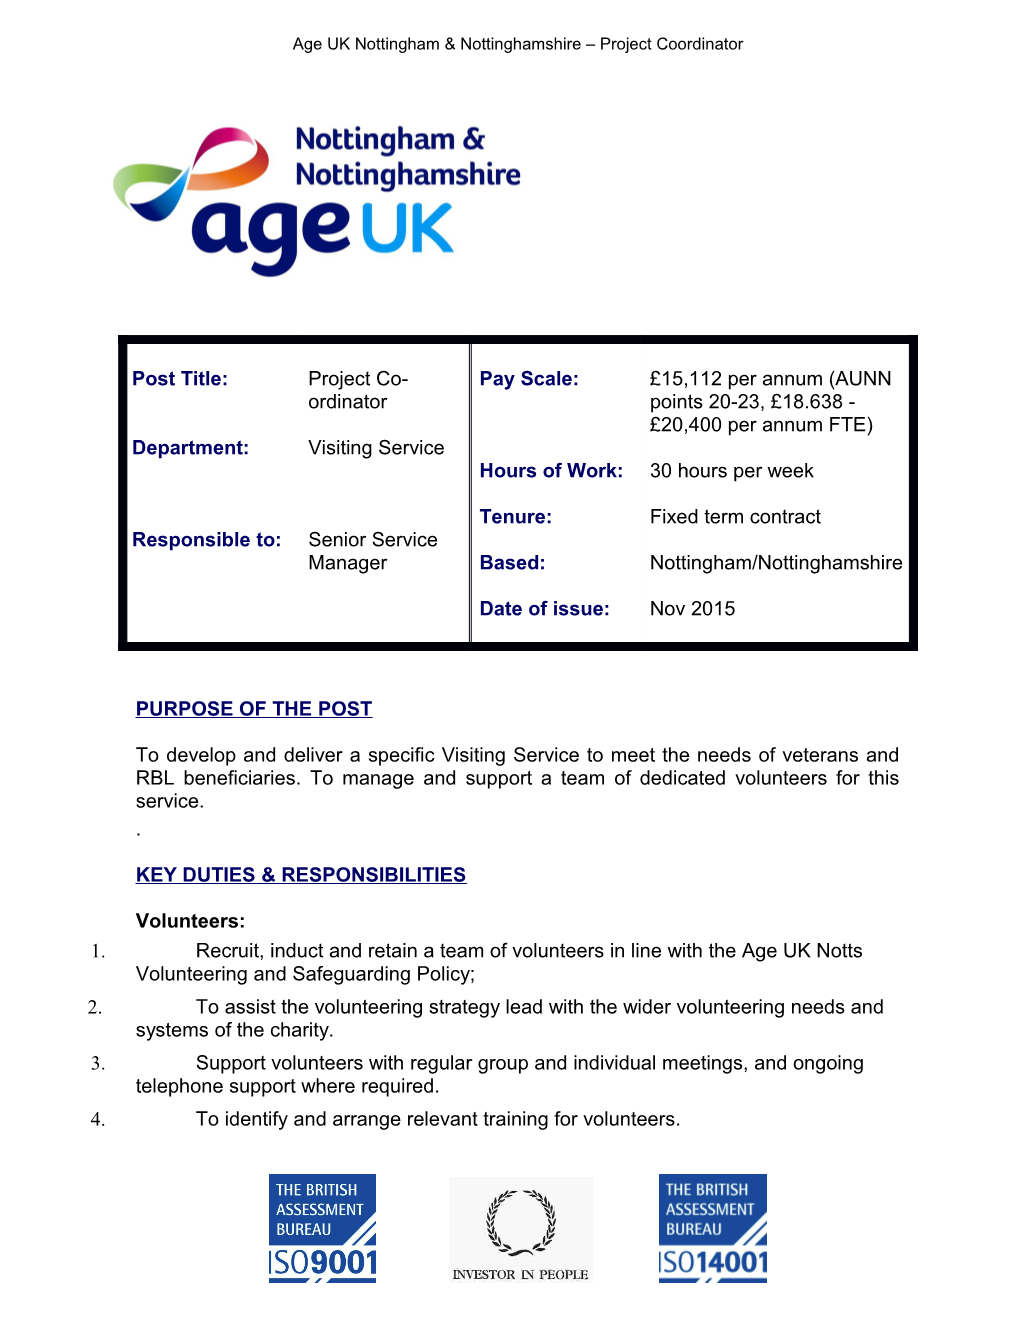 Age UK Nottingham Nottinghamshire Project Coordinator